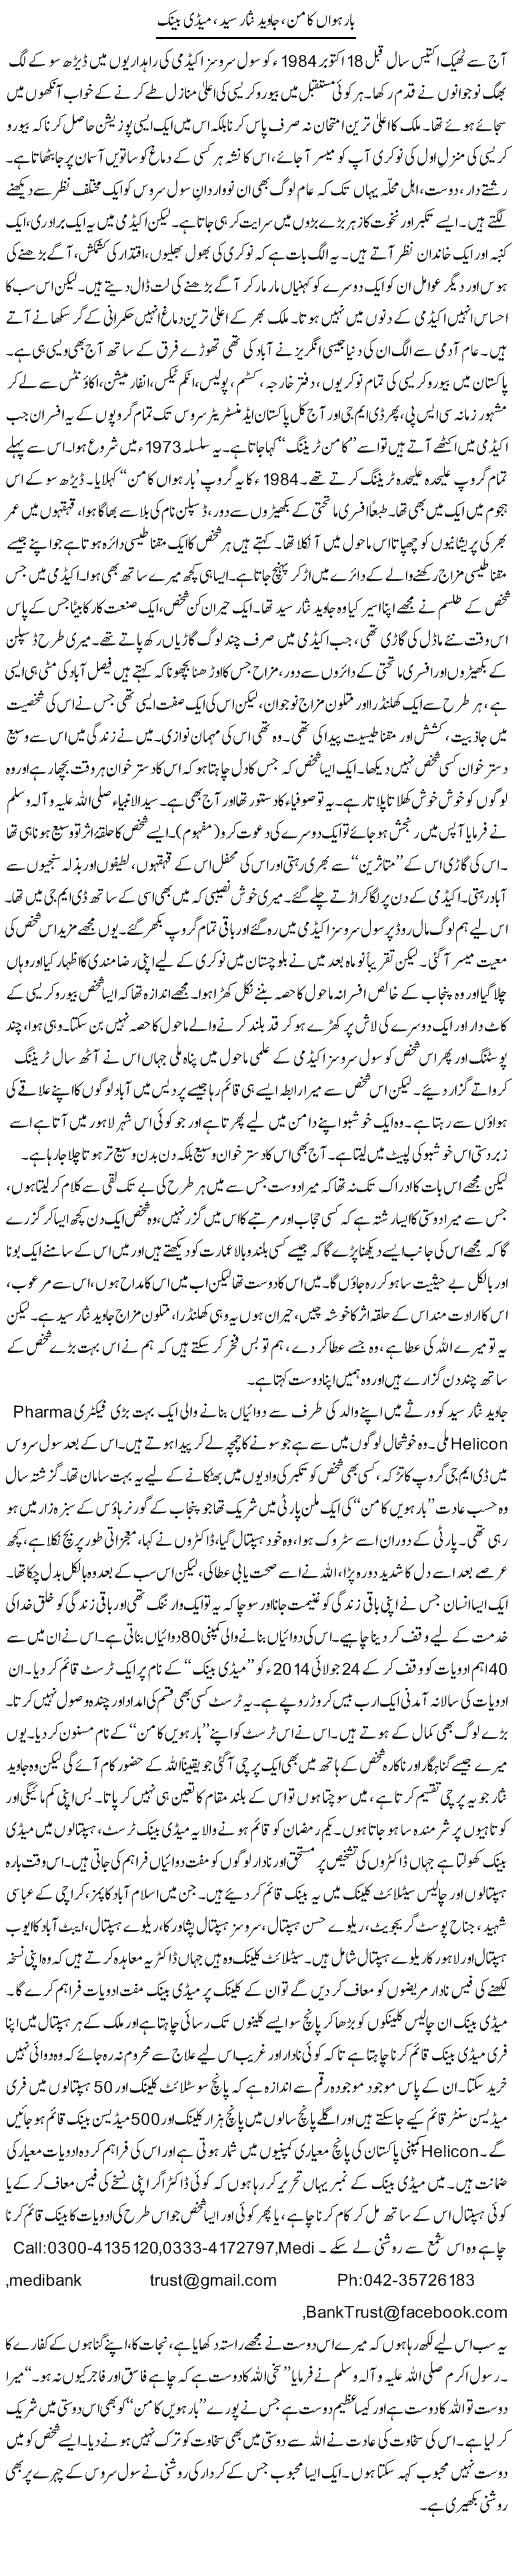 Barhwan Common, Javed Nisar Syed, Medi Bank | Orya Maqbool Jan | Daily Urdu Columns